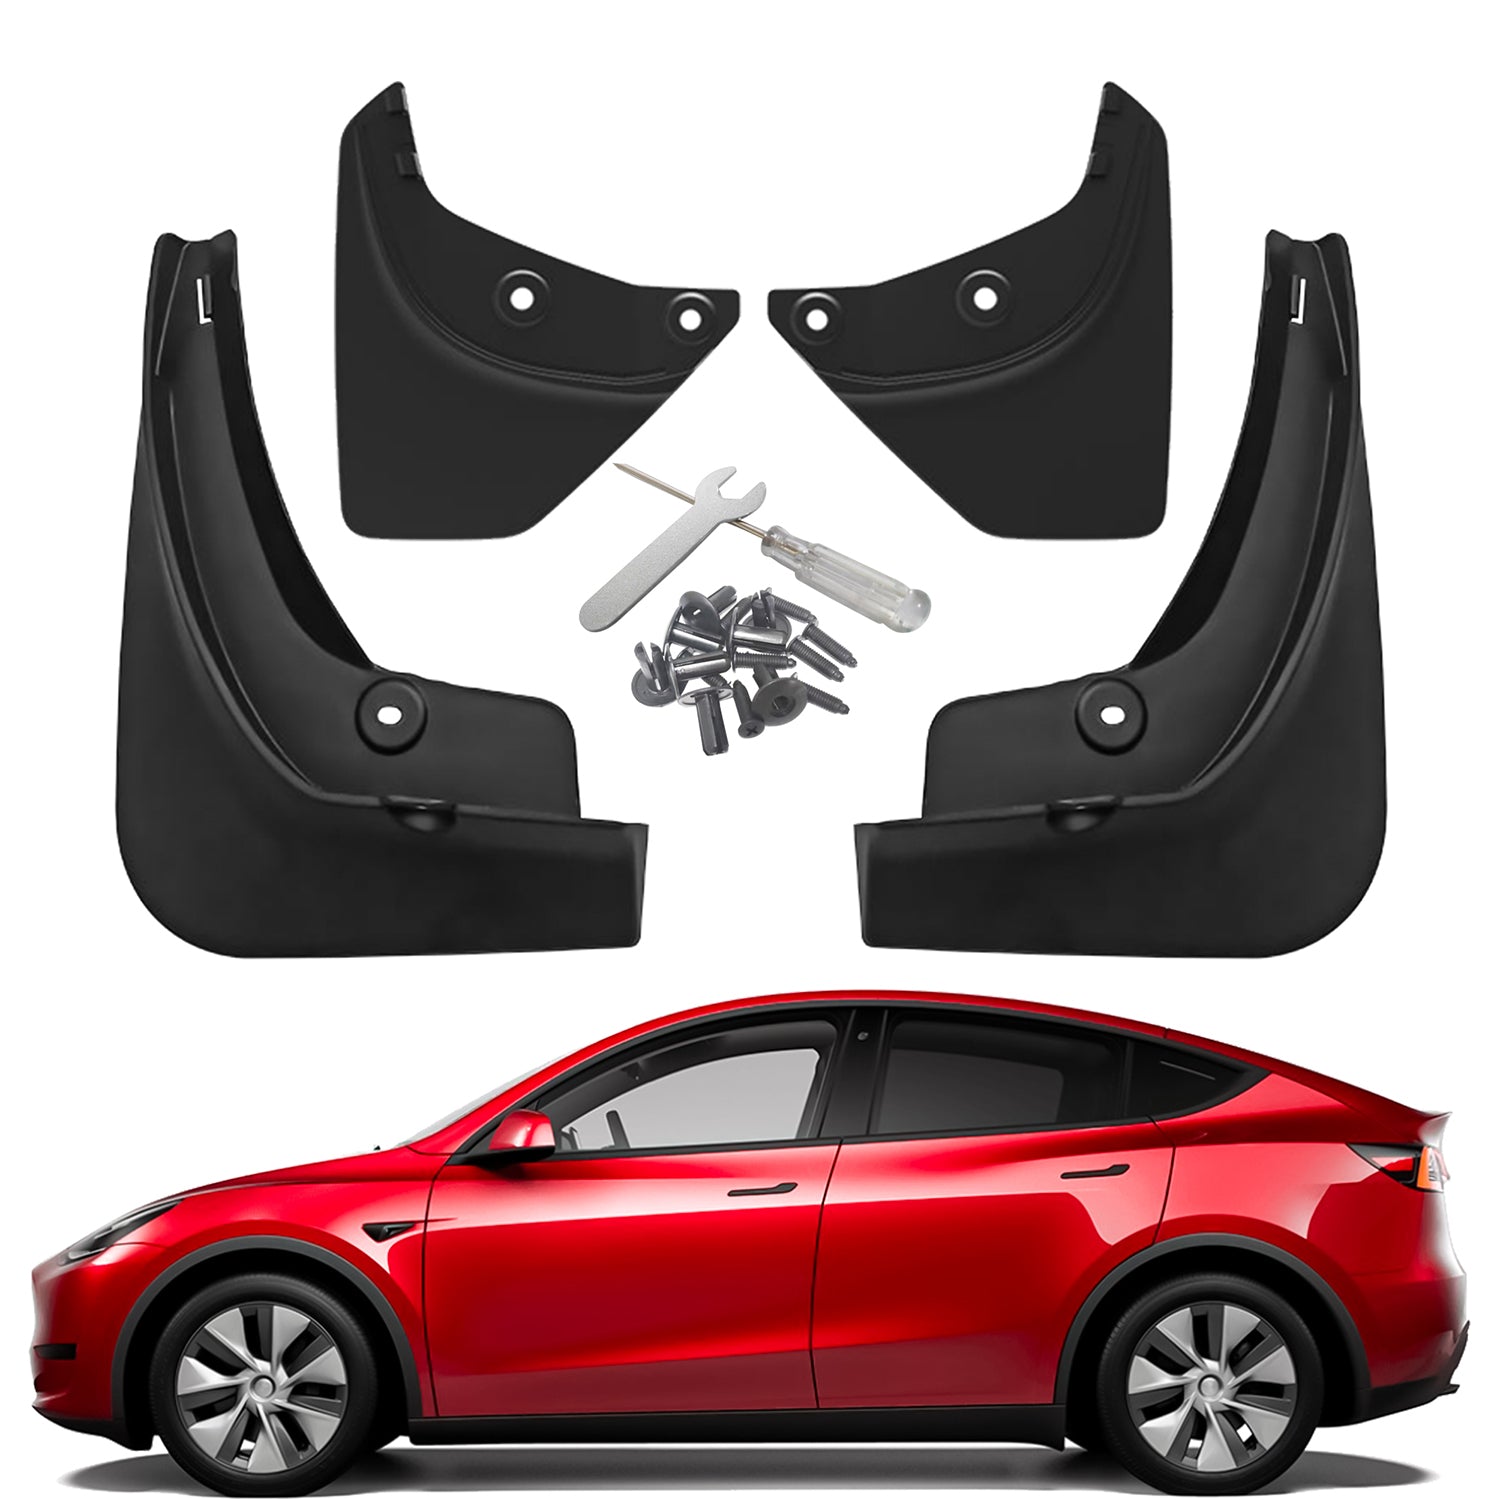 Garde-boue Tesla Model 3 - Équipement auto